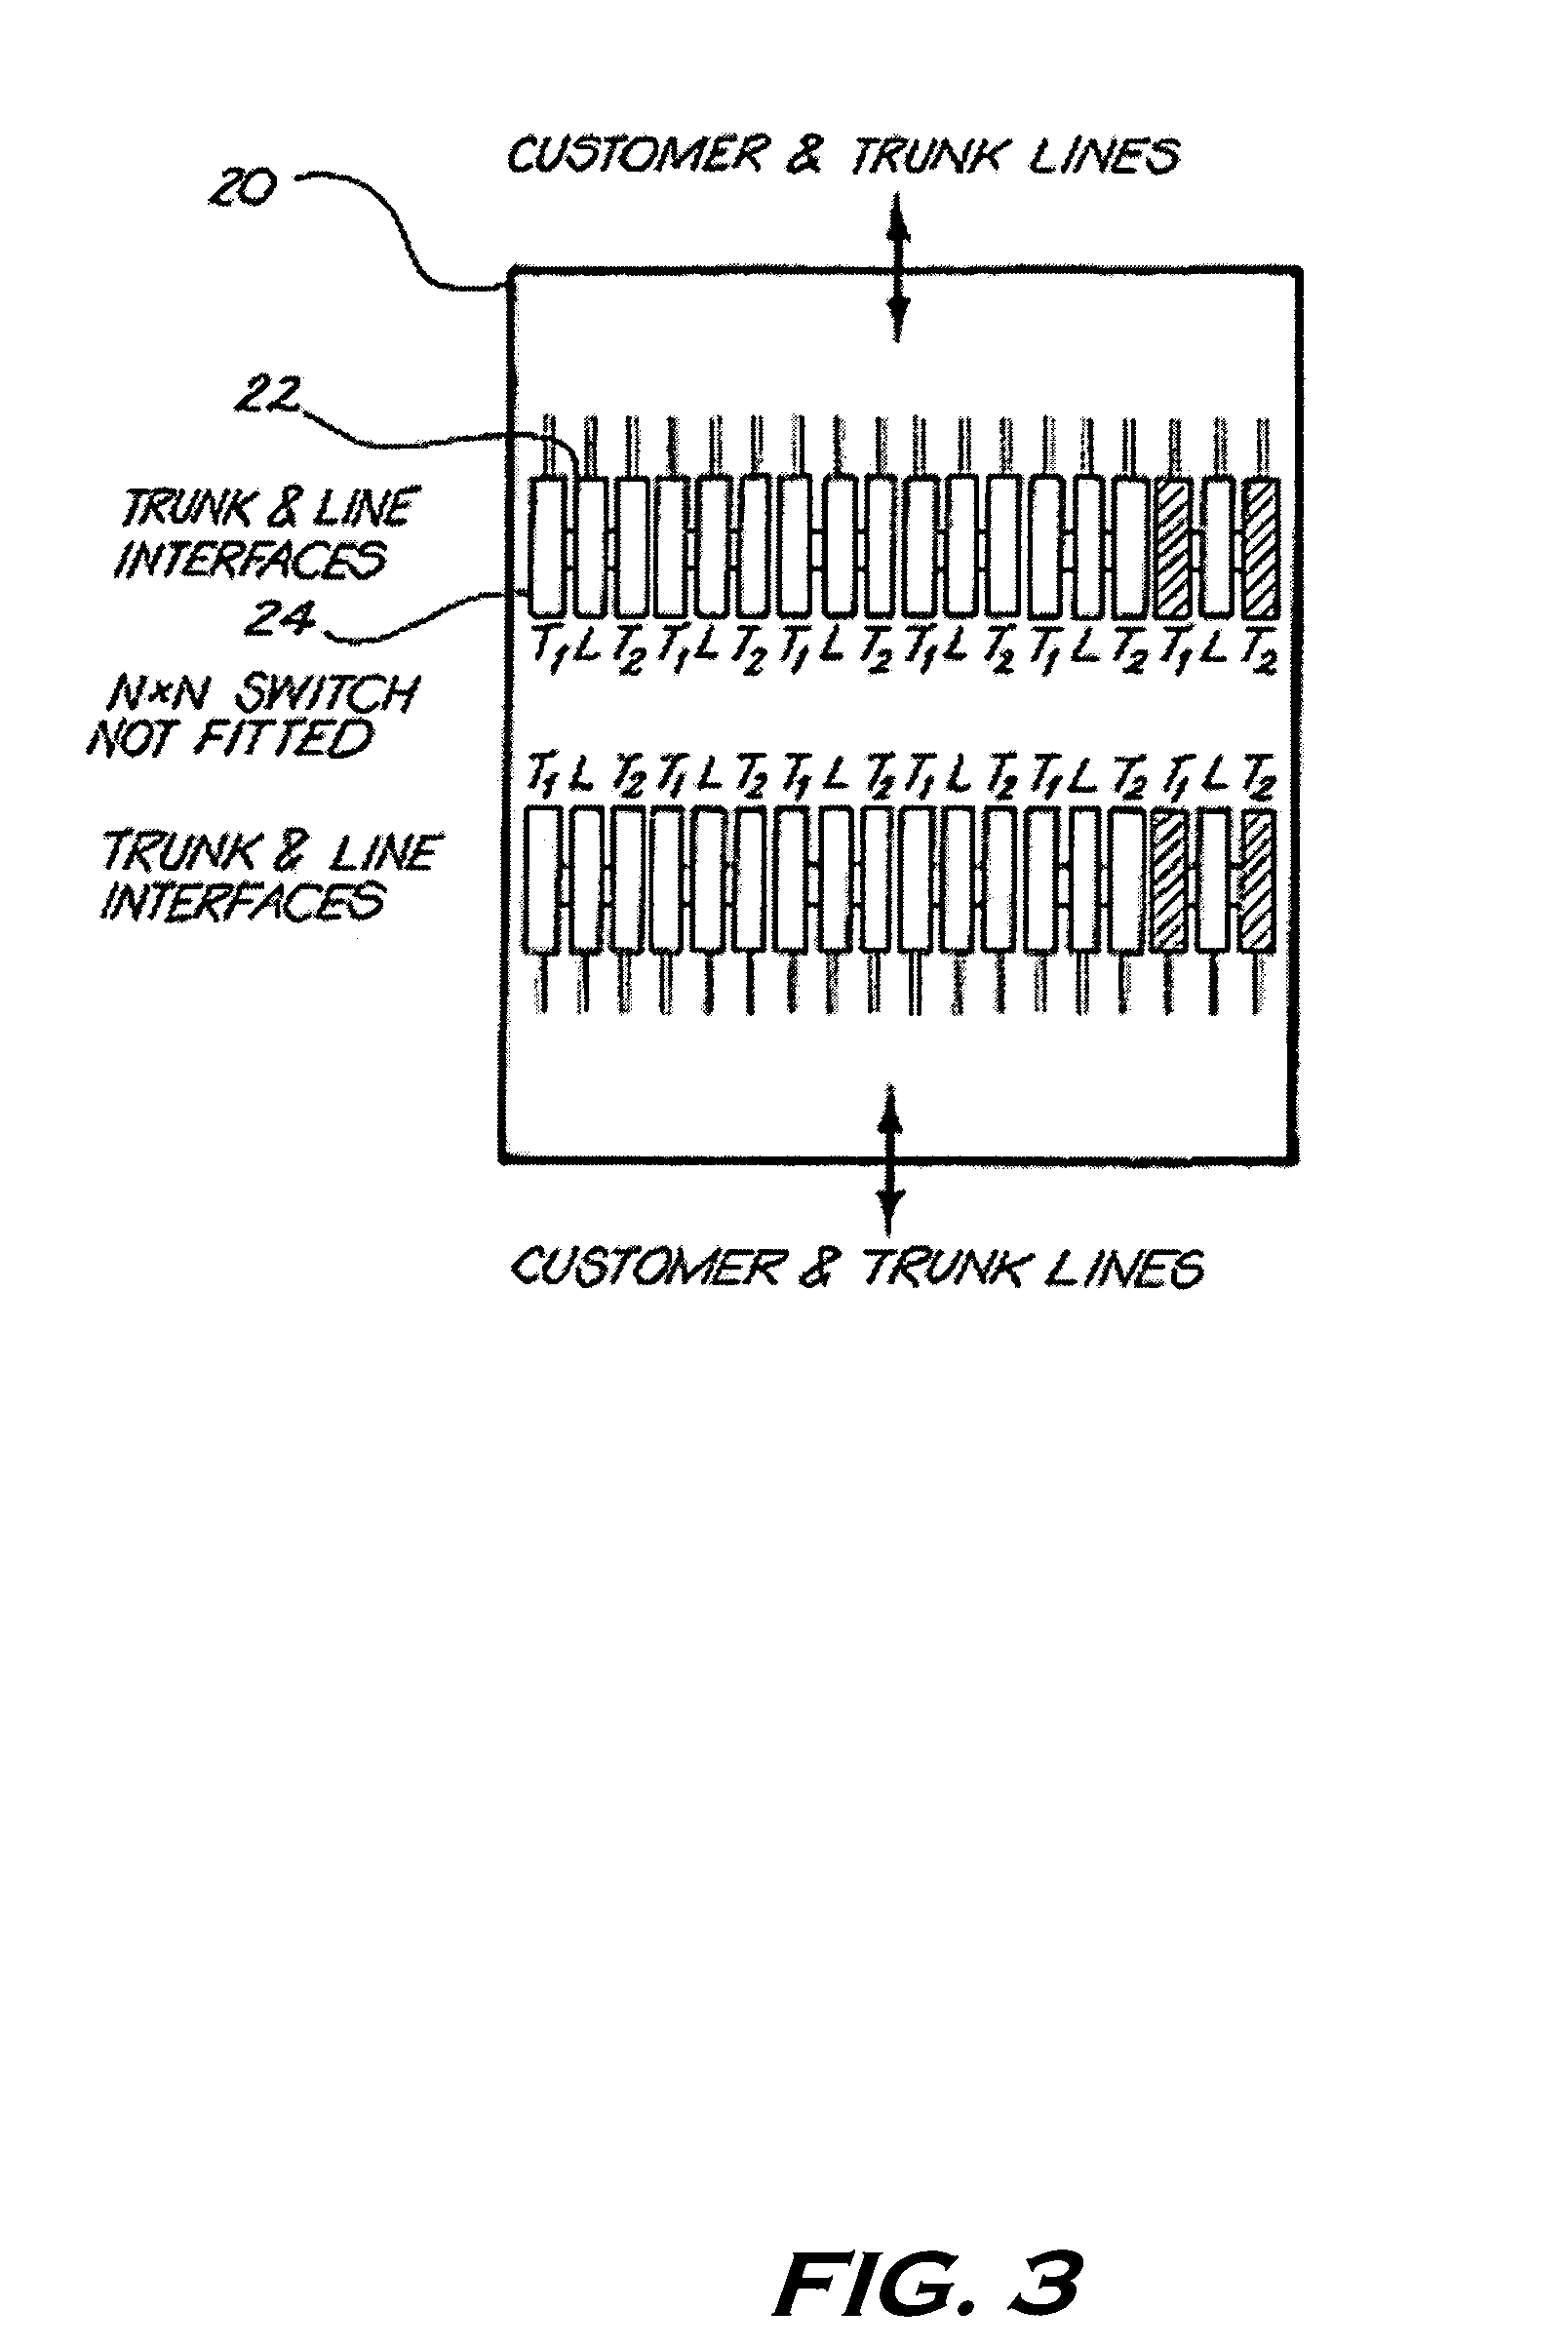 Terminal multiplexer structure